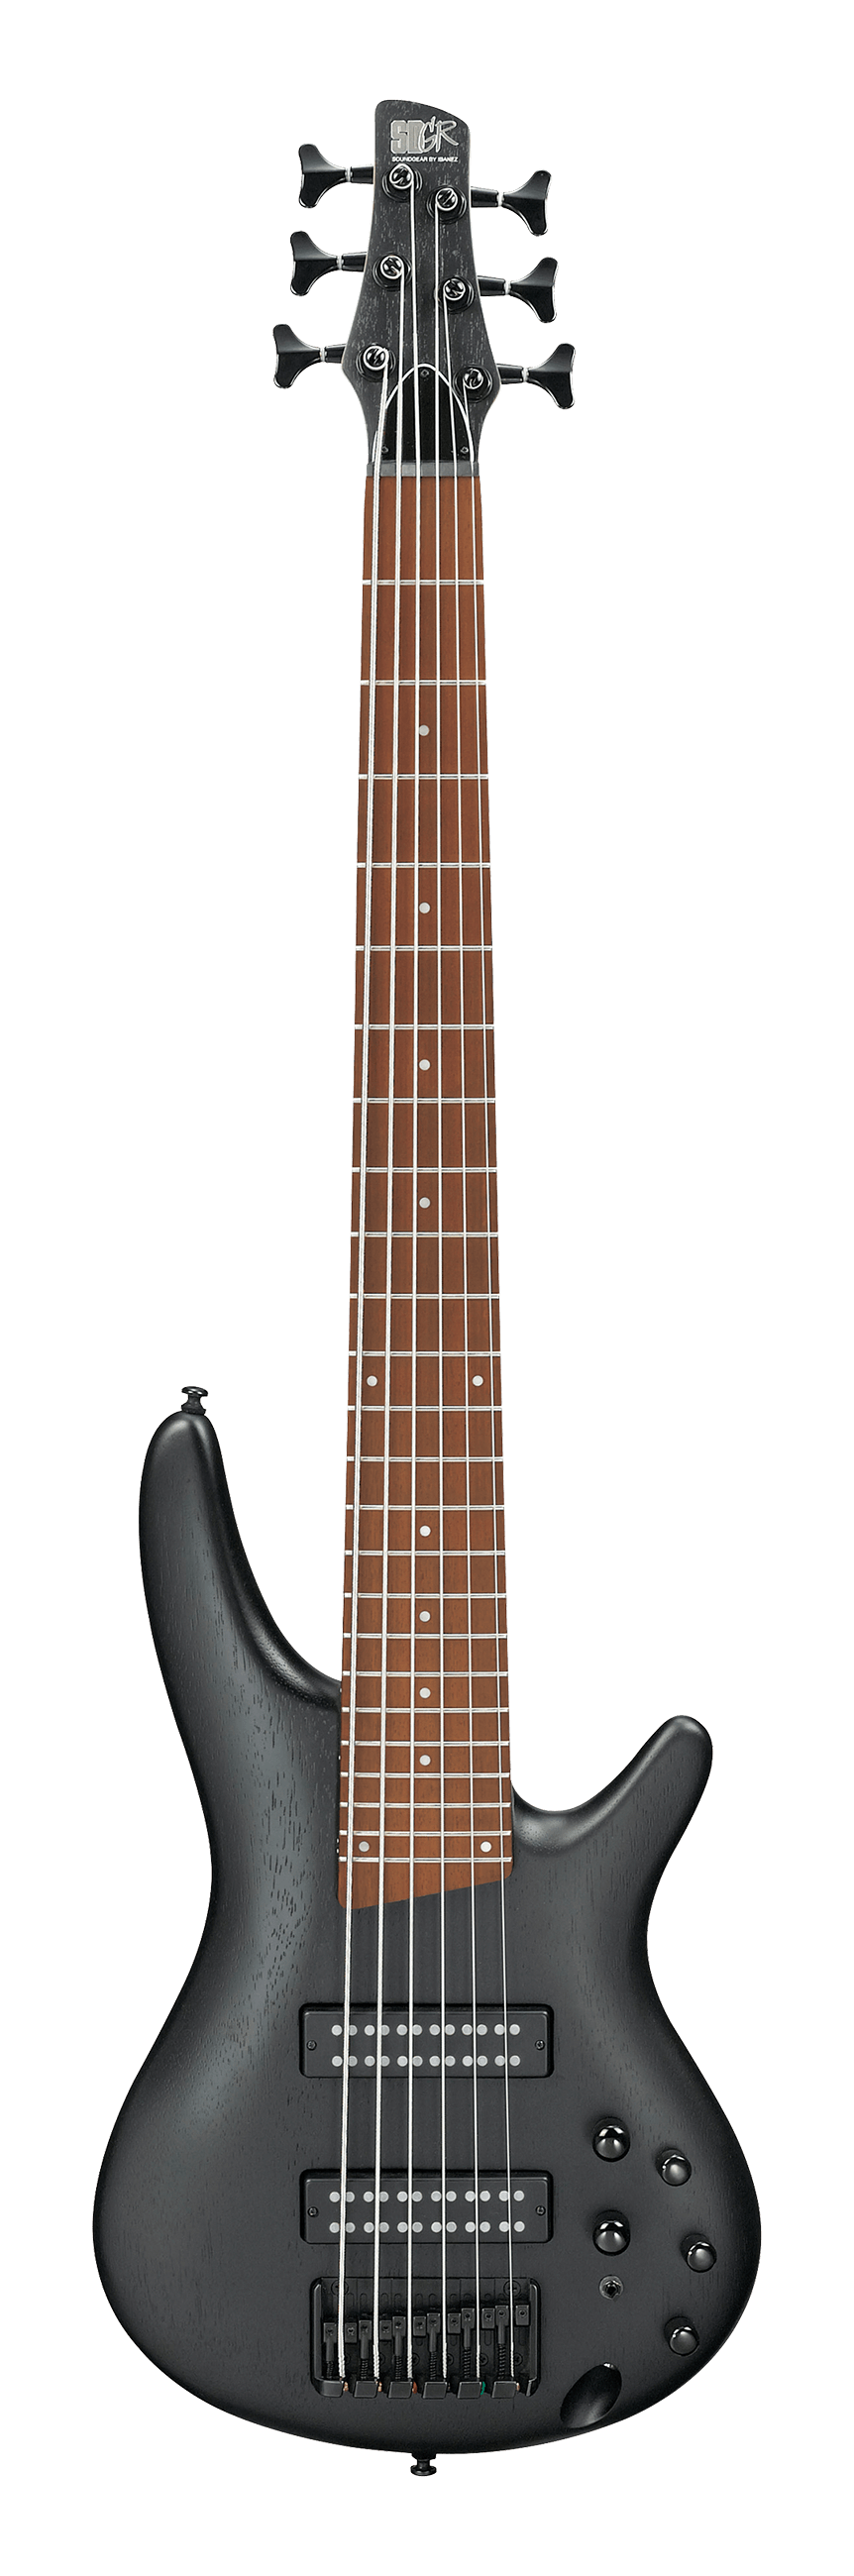 Ibanez SR306EB Standard 6 String Bass Guitar - Weathered Black